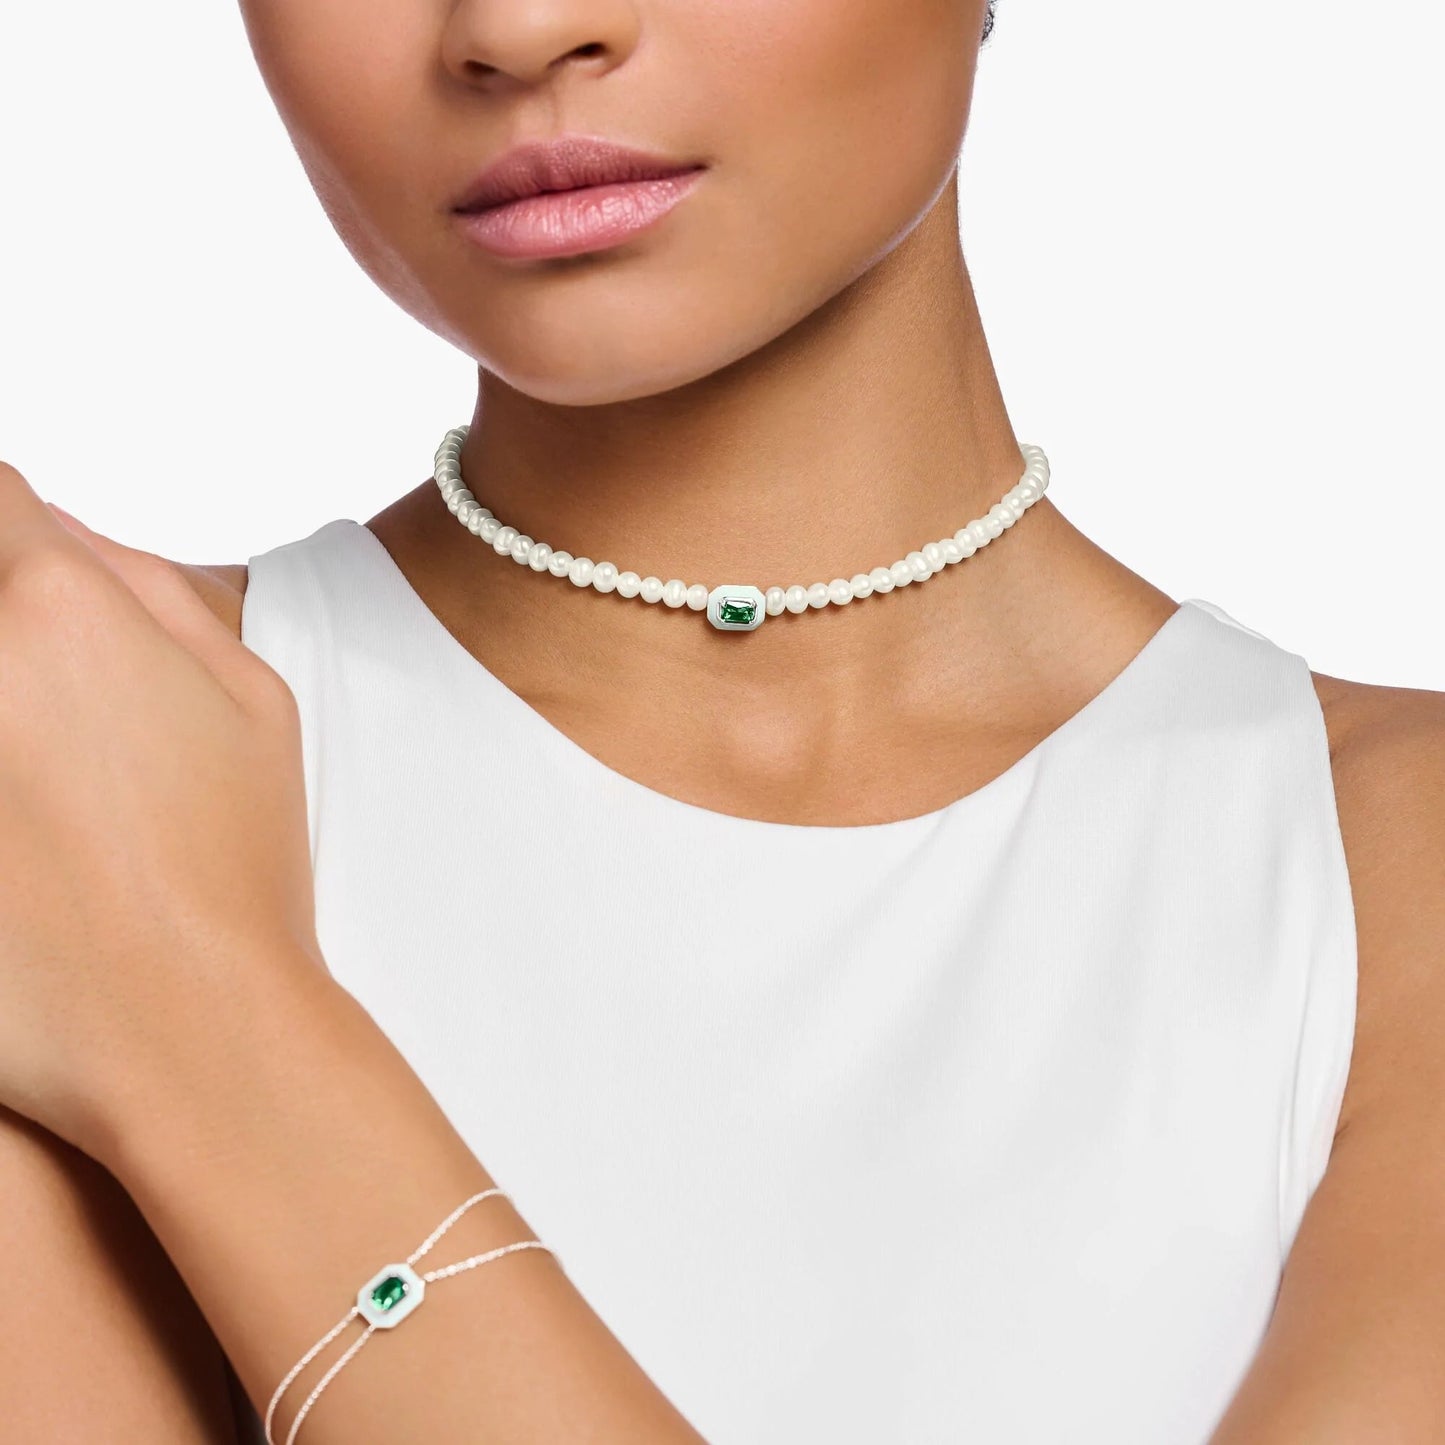 THOMAS SABO Choker Pearls With Green Stone